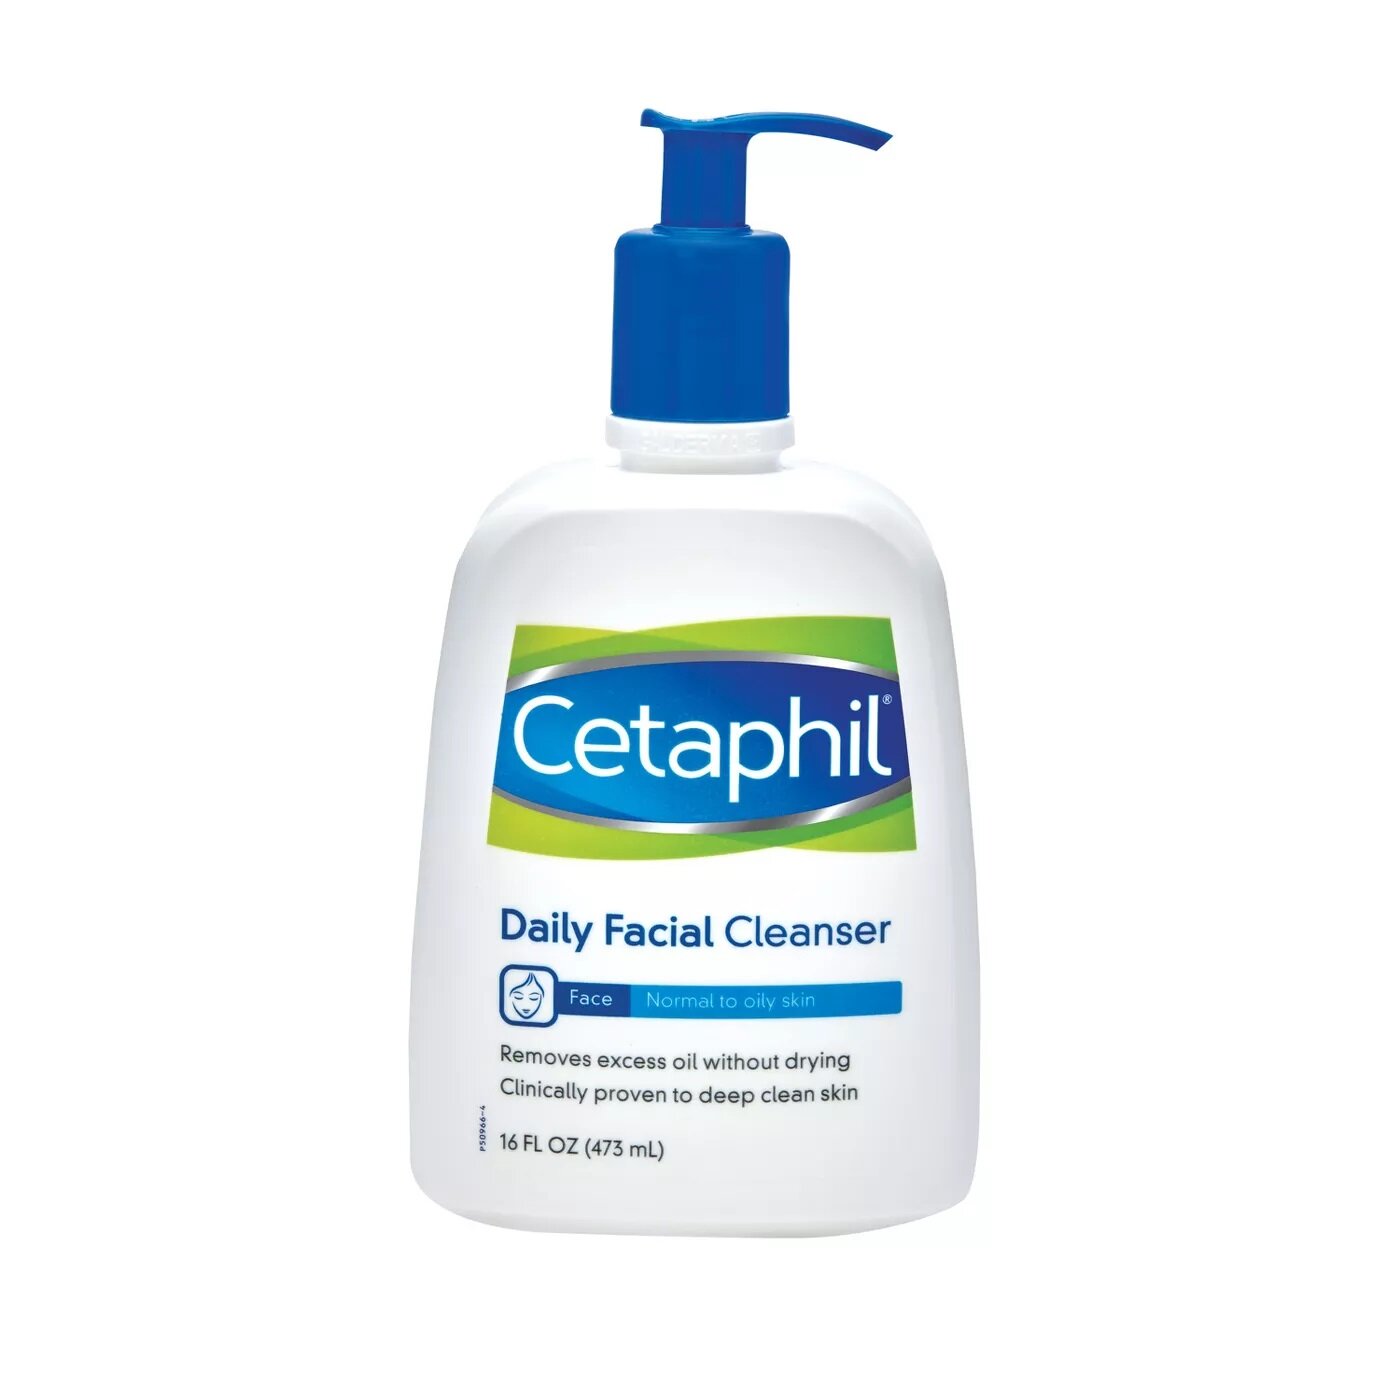 Cetaphil Daily Facial Cleanser.jpg